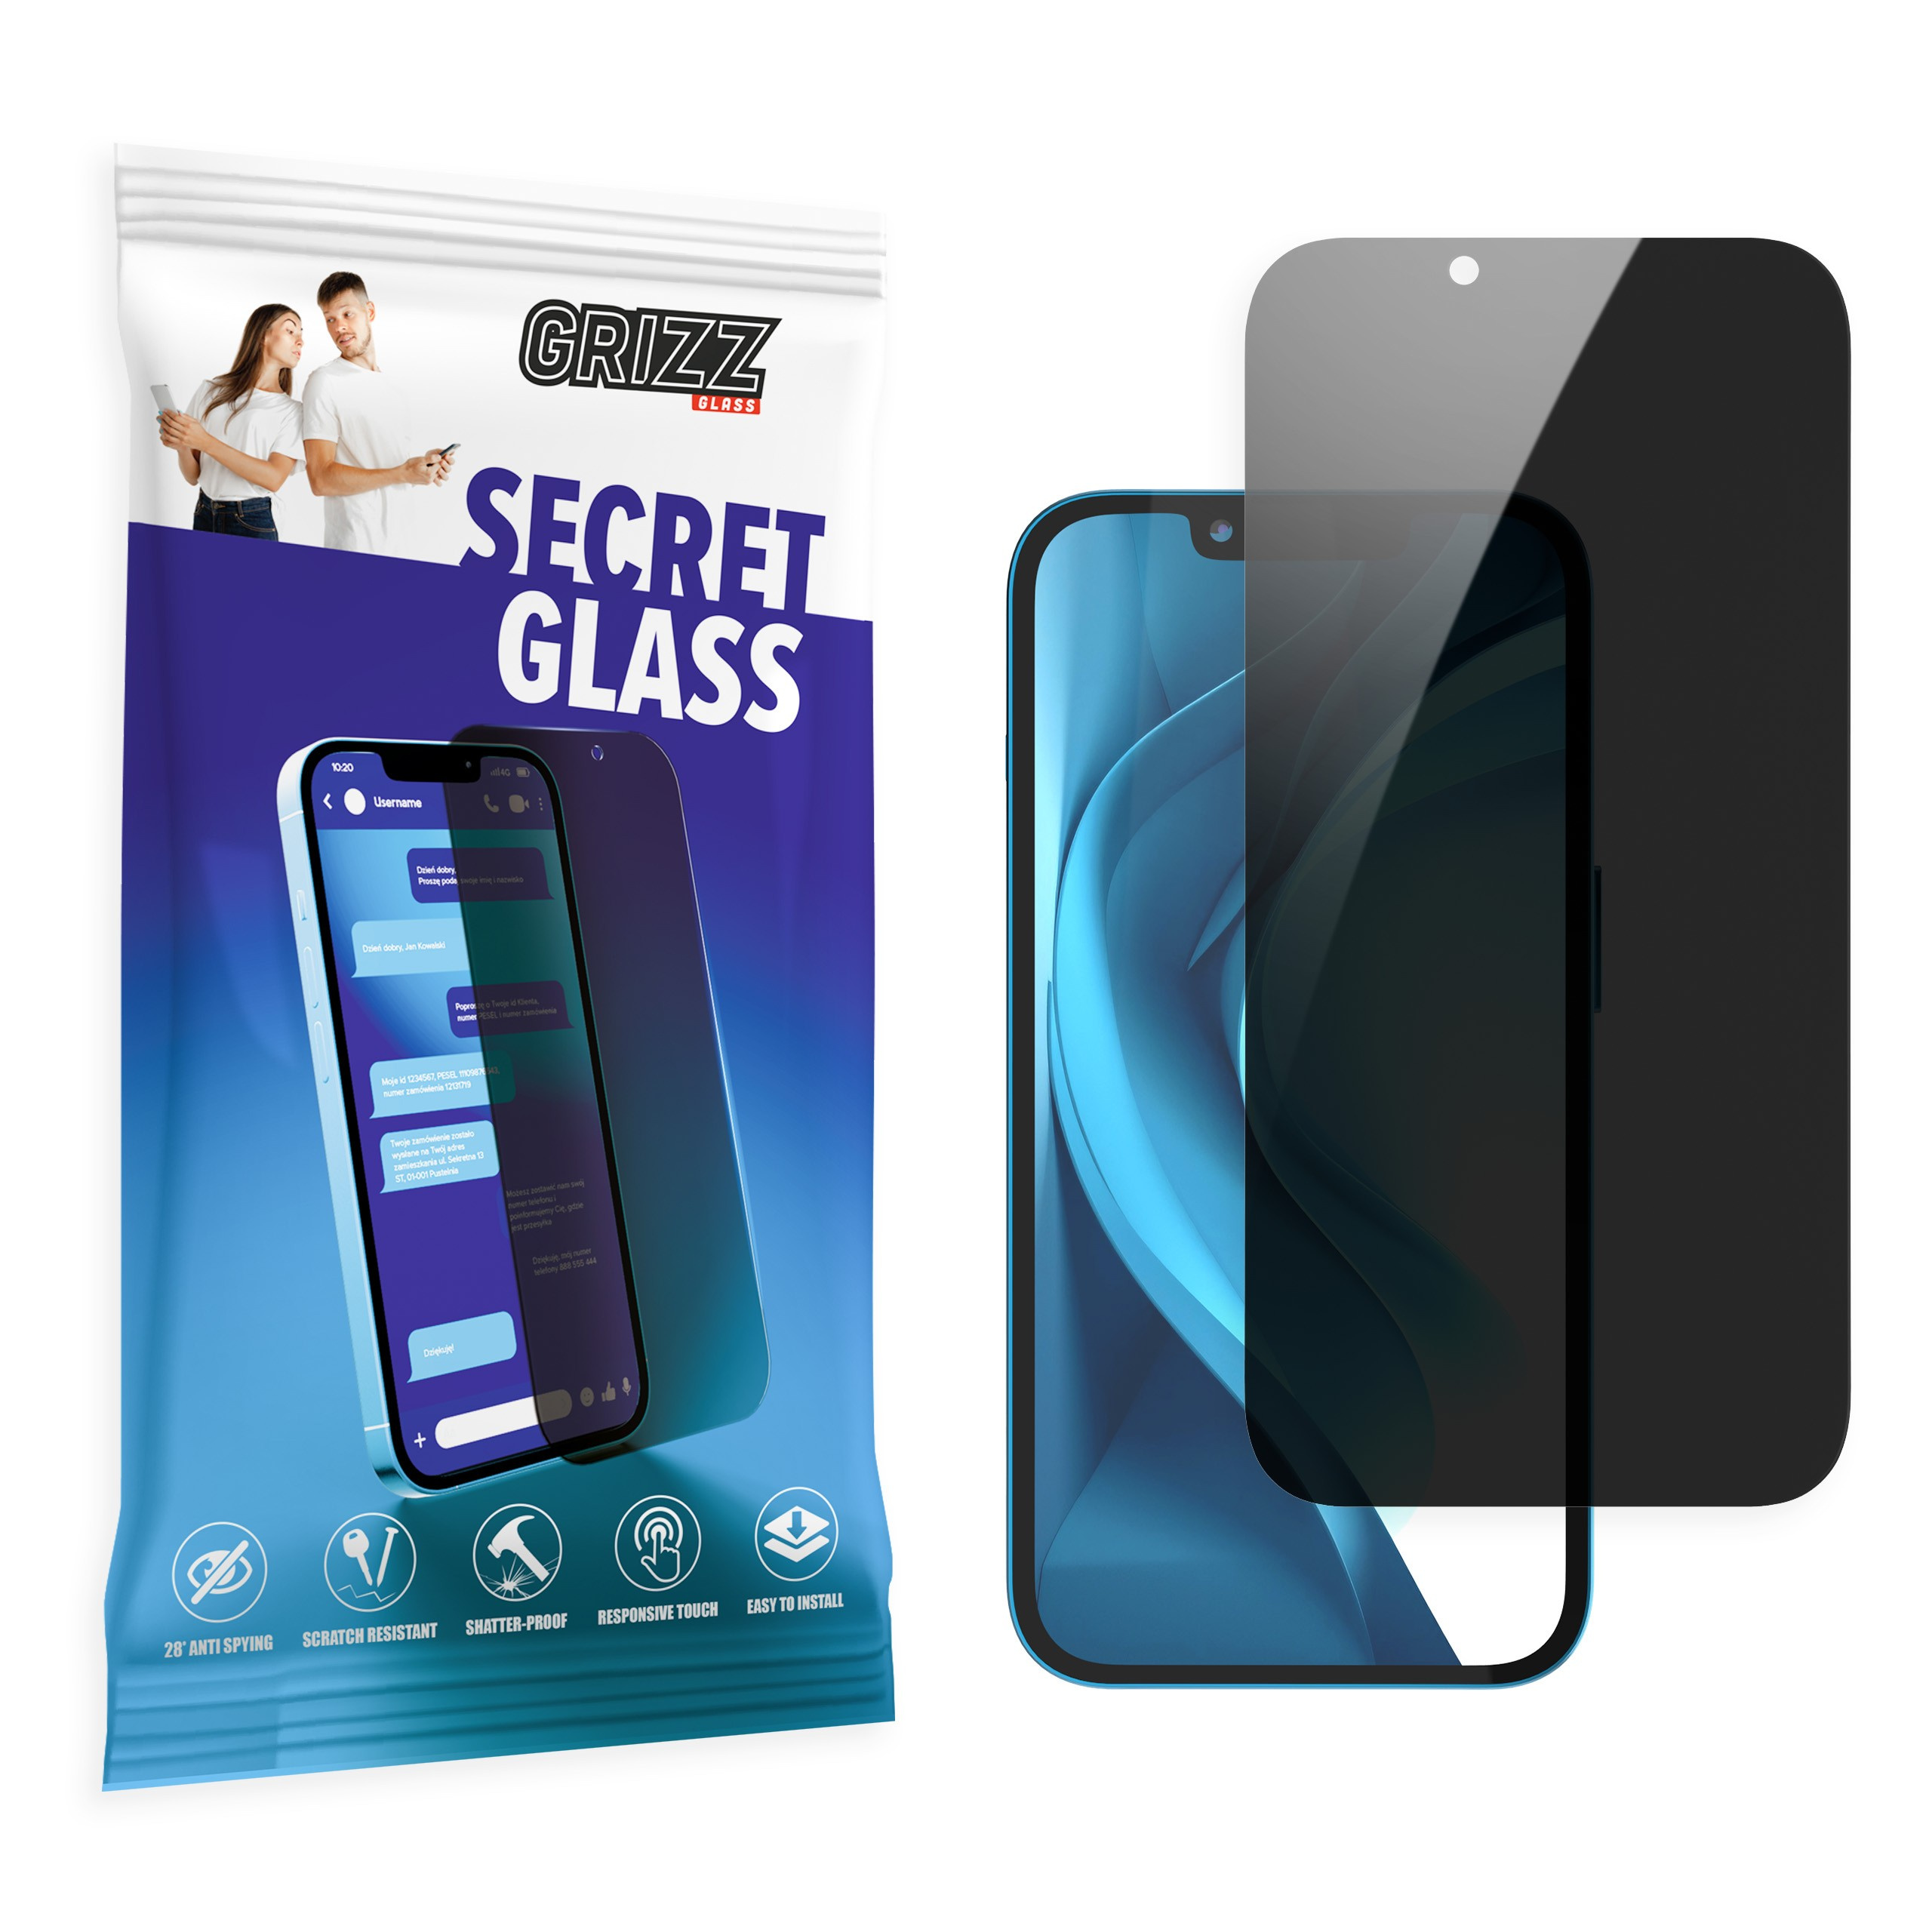 GrizzGlass SecretGlass Huawei P10